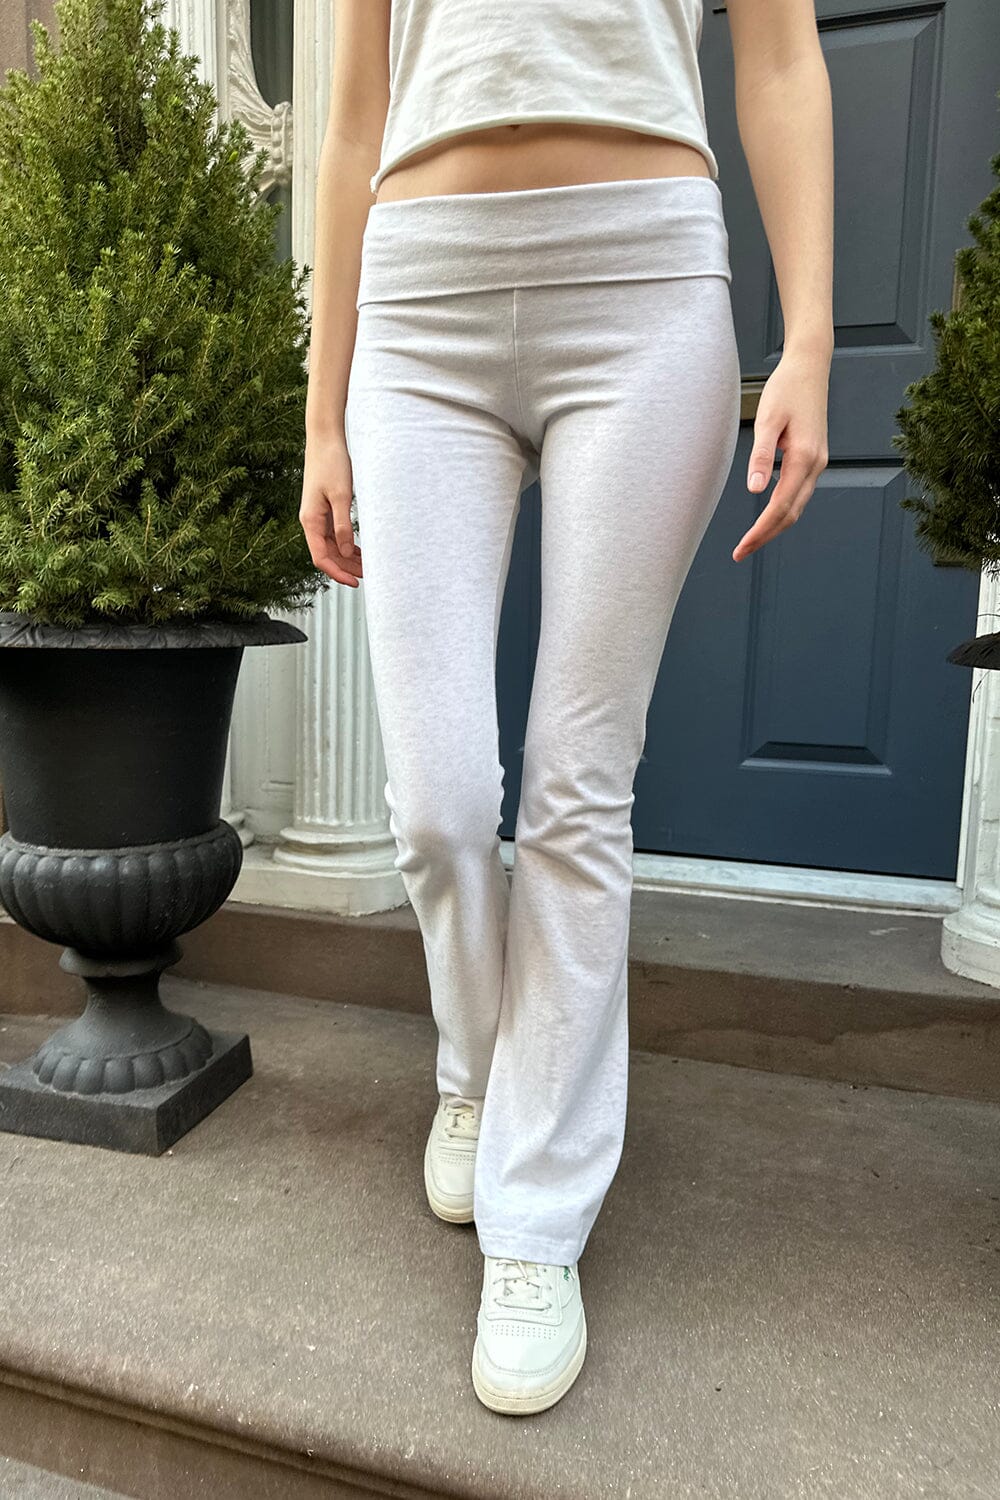 Brandy Melville - BRANDY MELVILLE YOGA PANTS on Designer Wardrobe